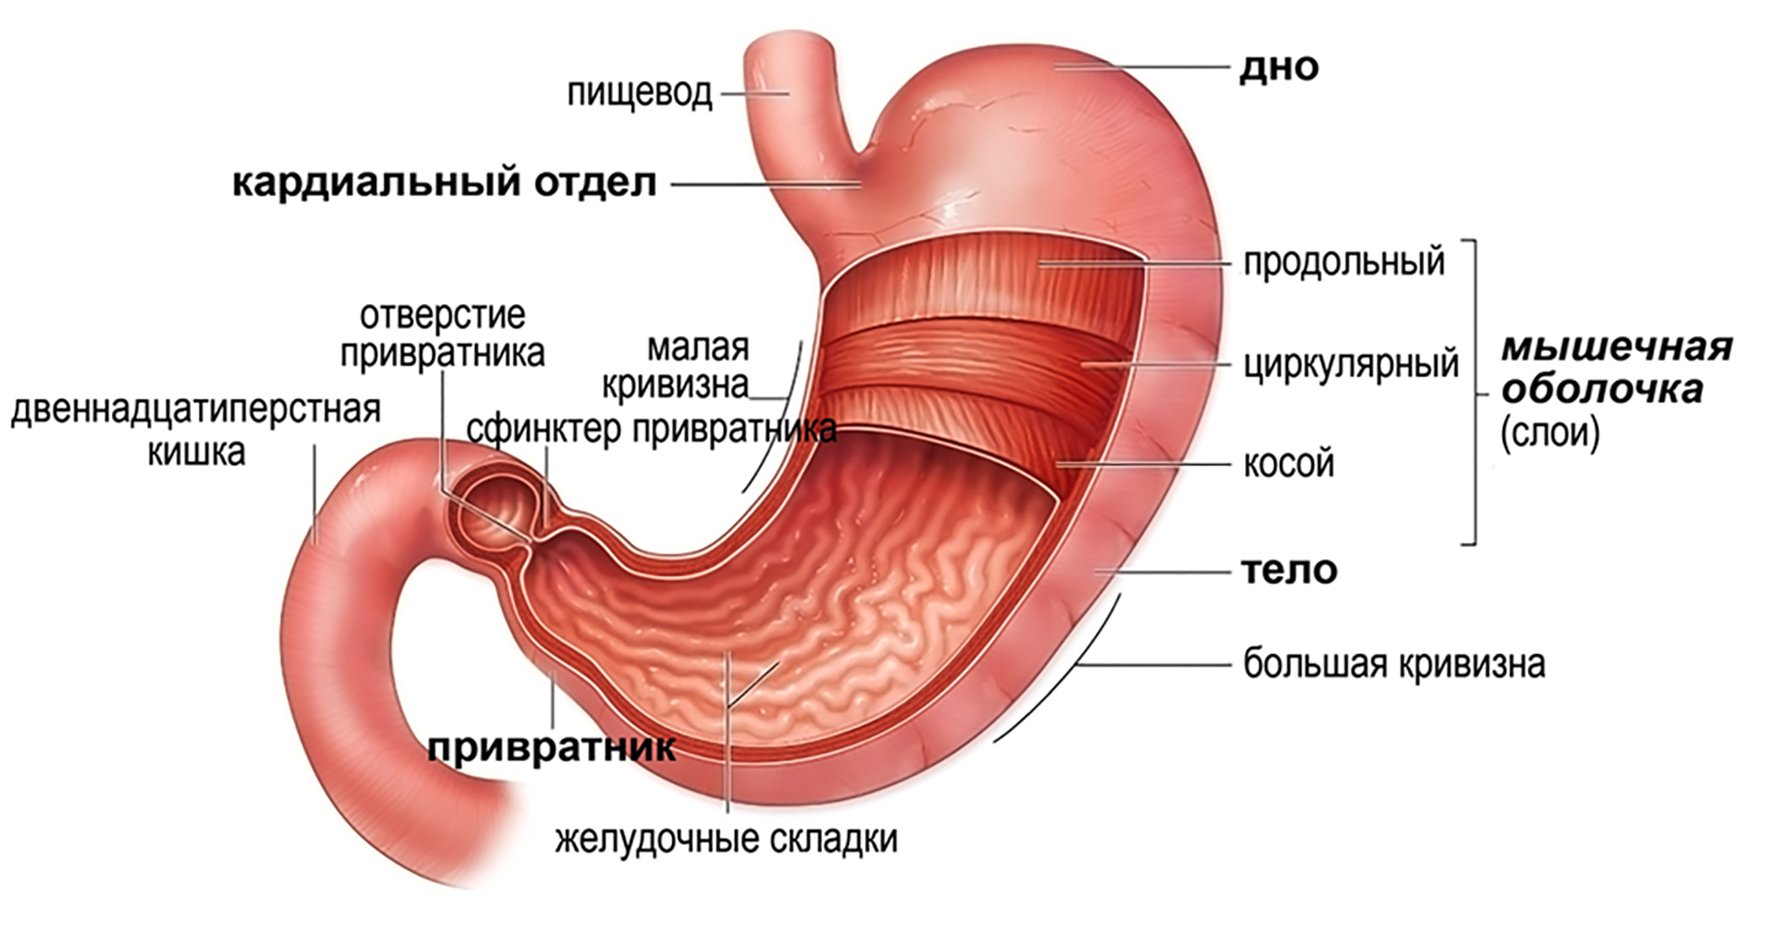 Части органа желудка. Внешнее строение желудка анатомия. Желудок строение анатомия атлас. Строение желудка человека привратник. Привратник желудка анатомия.